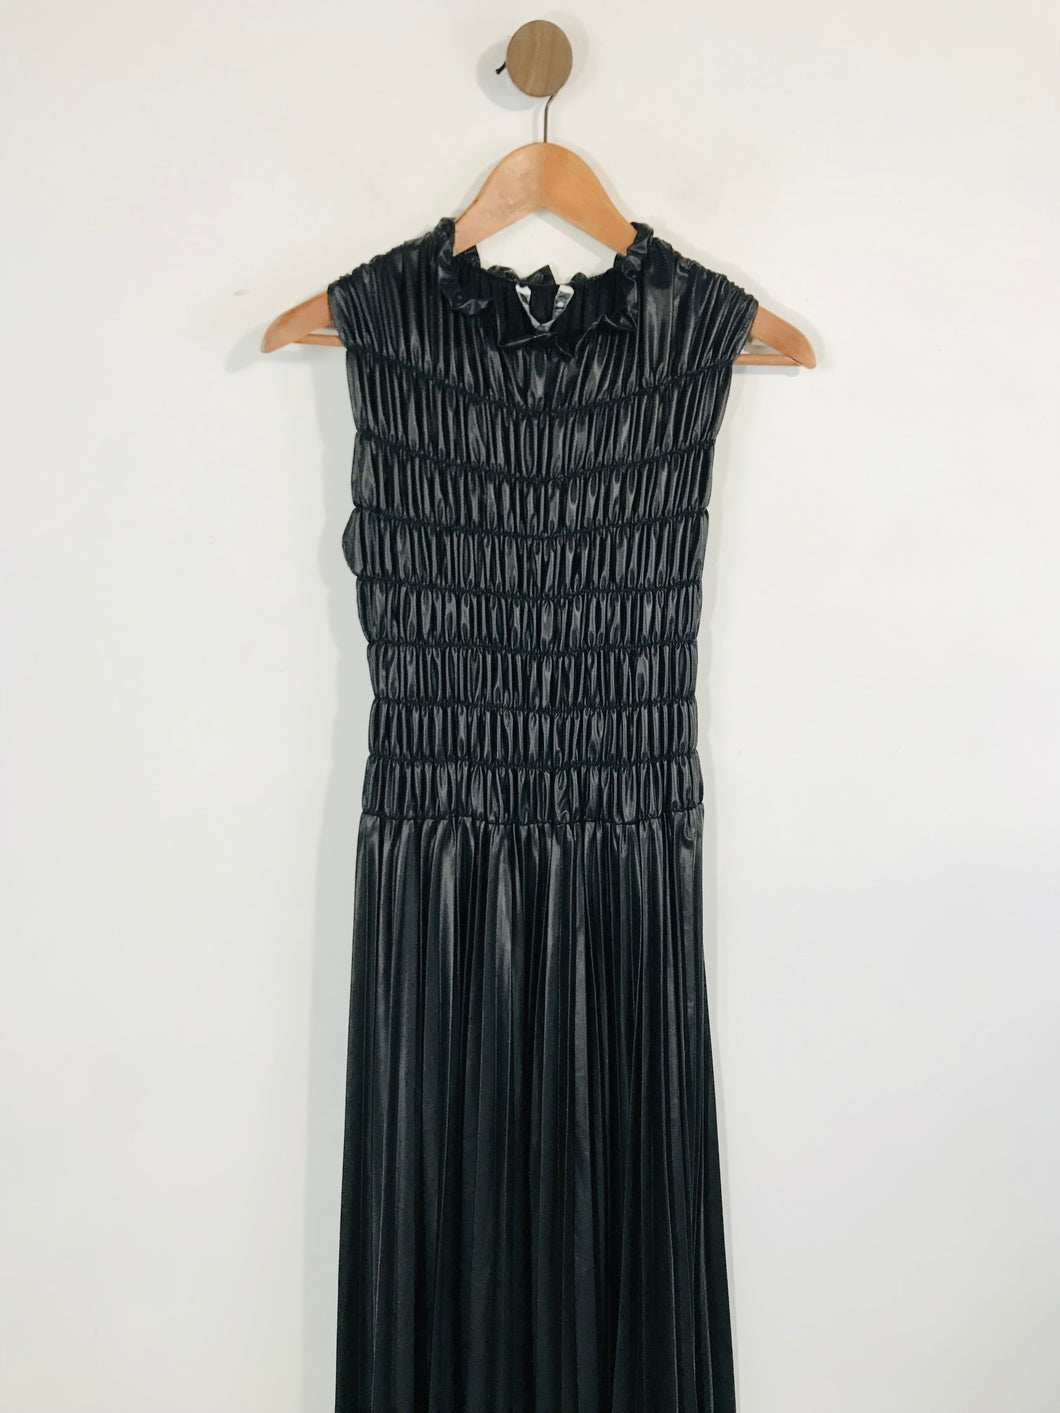 Zara Women's Faux Leather Pleated A-Line Dress NWT | M UK10-12 | Black